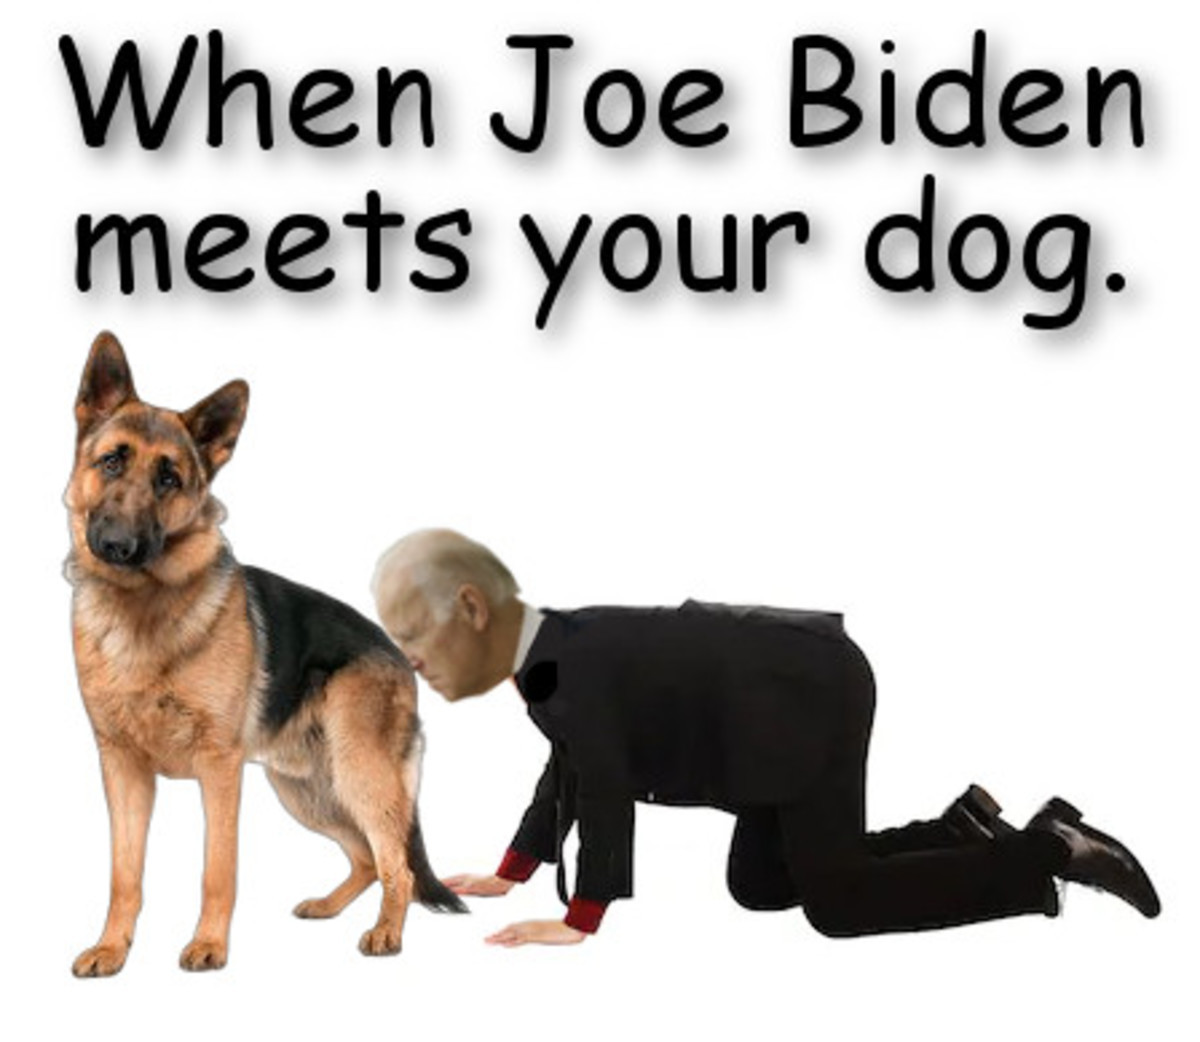 When Biden meets your dog